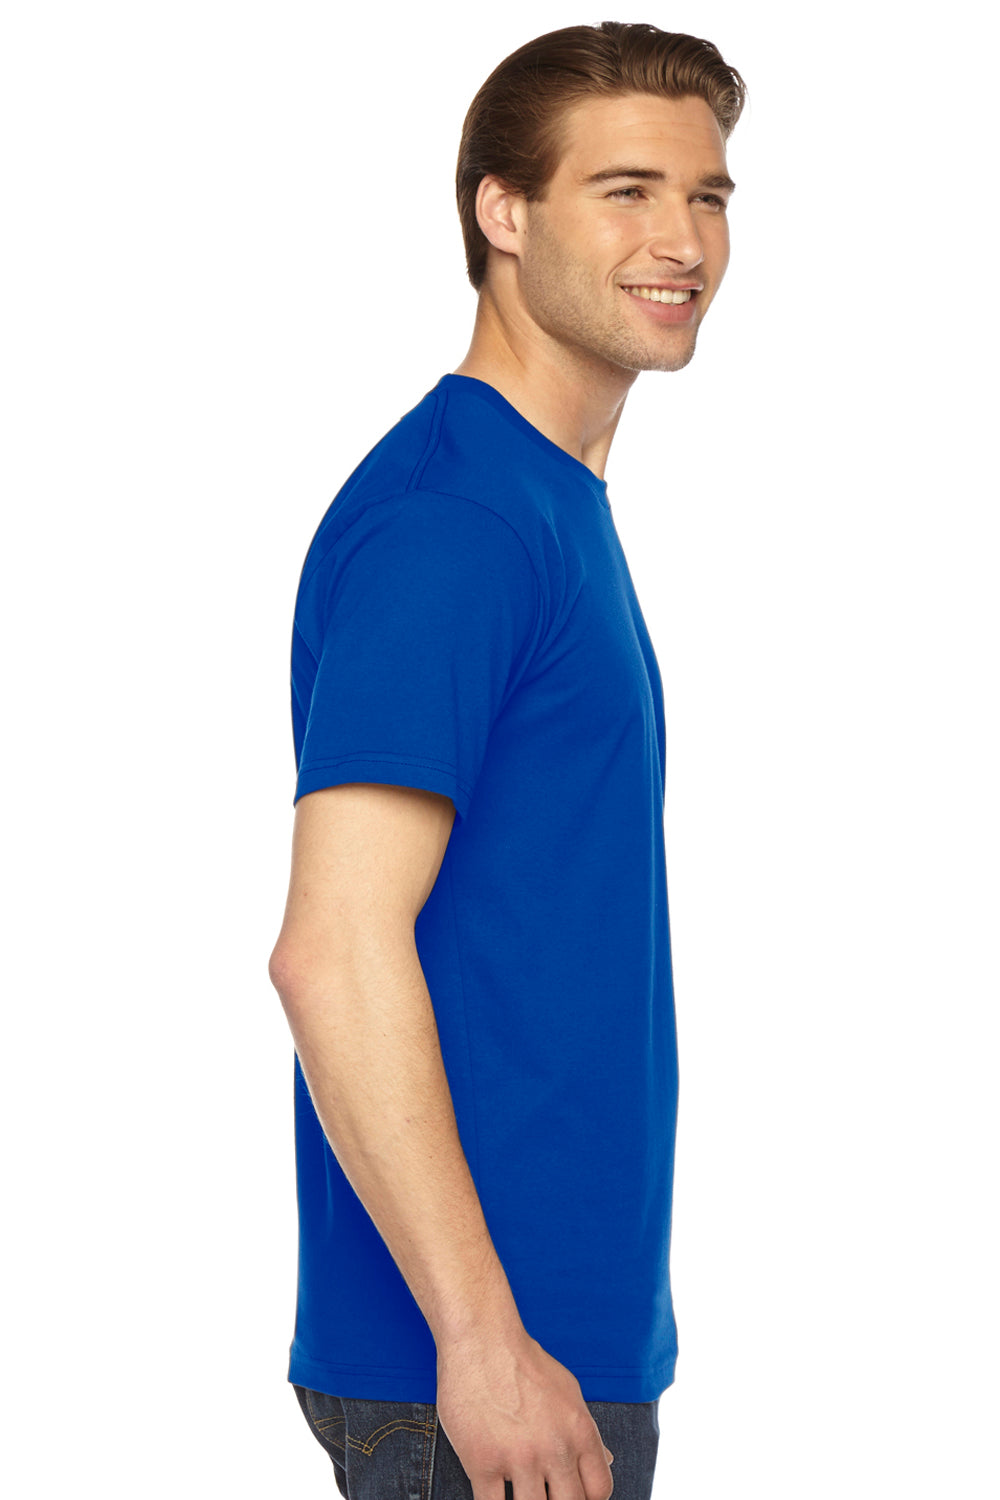 American Apparel 2001 Mens USA Made Fine Jersey Short Sleeve Crewneck T-Shirt Royal Blue Side